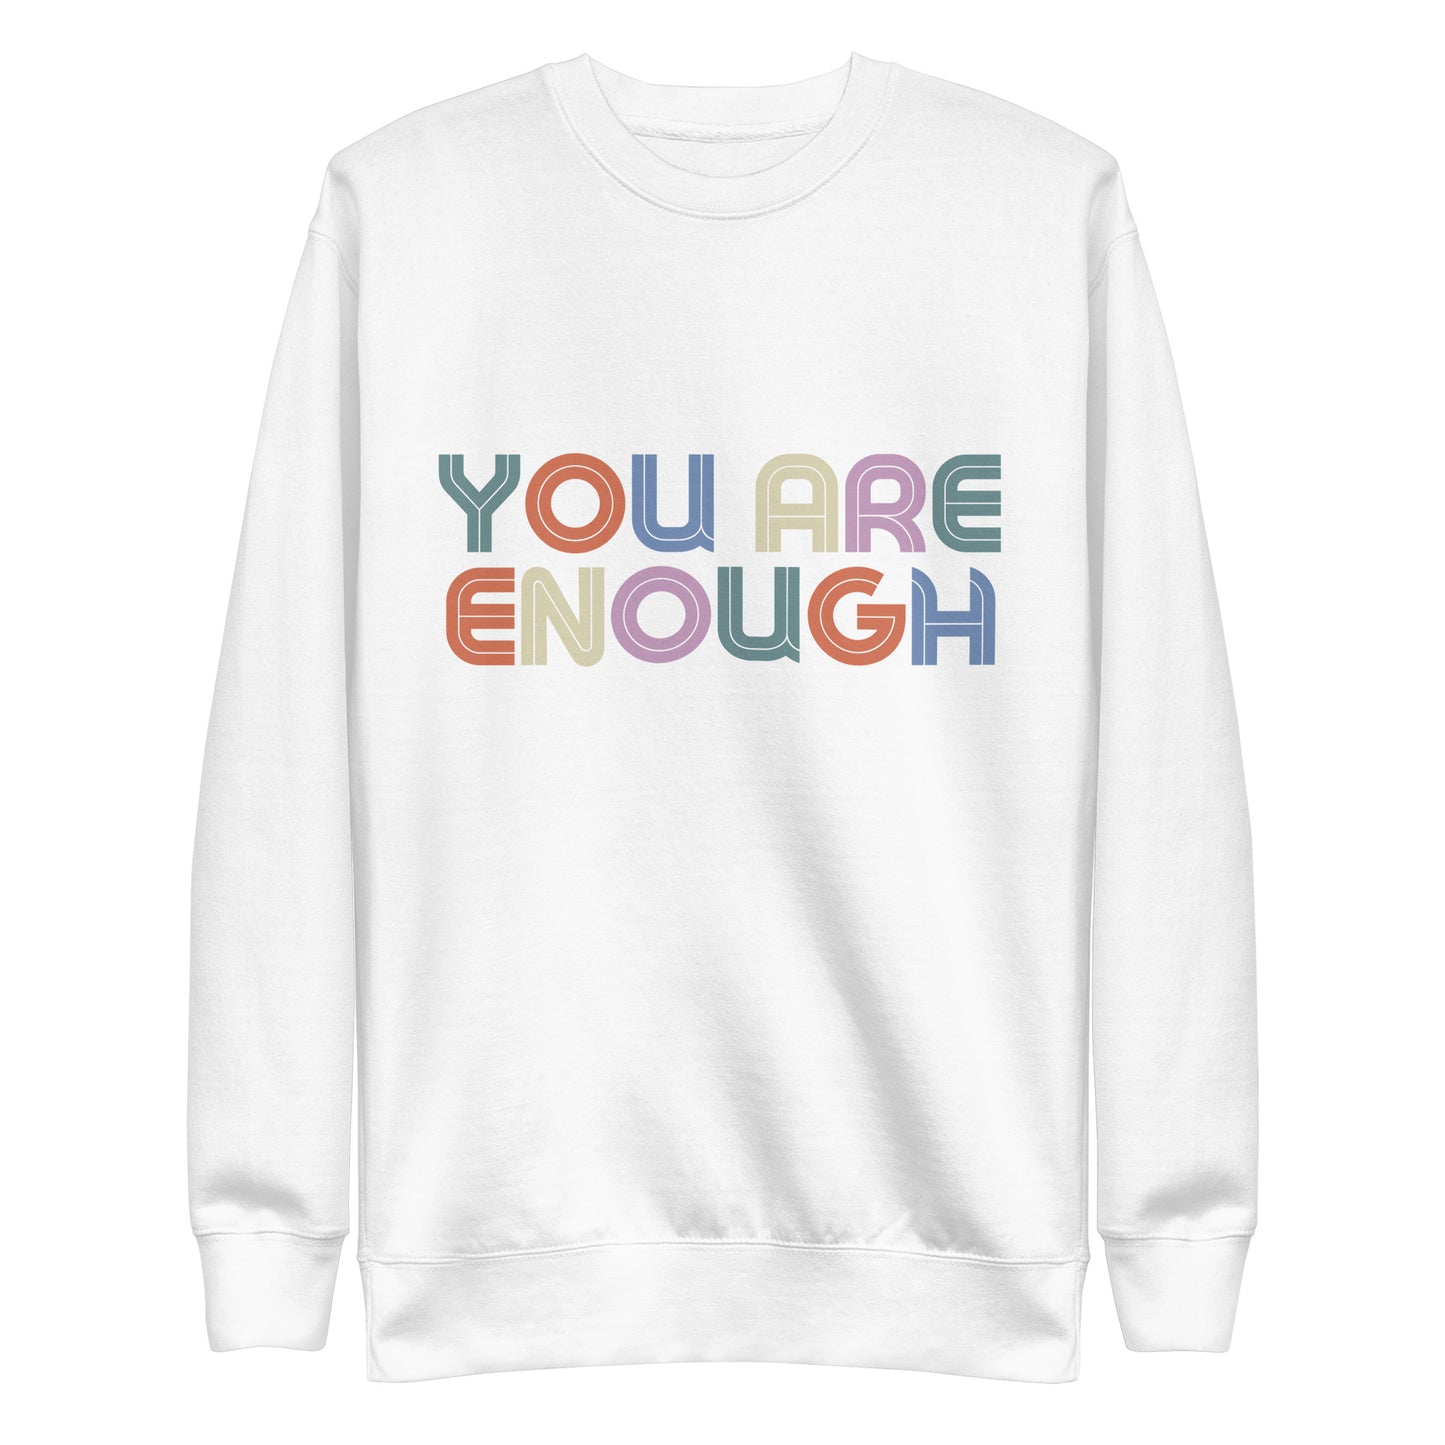 You are enough Unisex Premium Sweatshirt